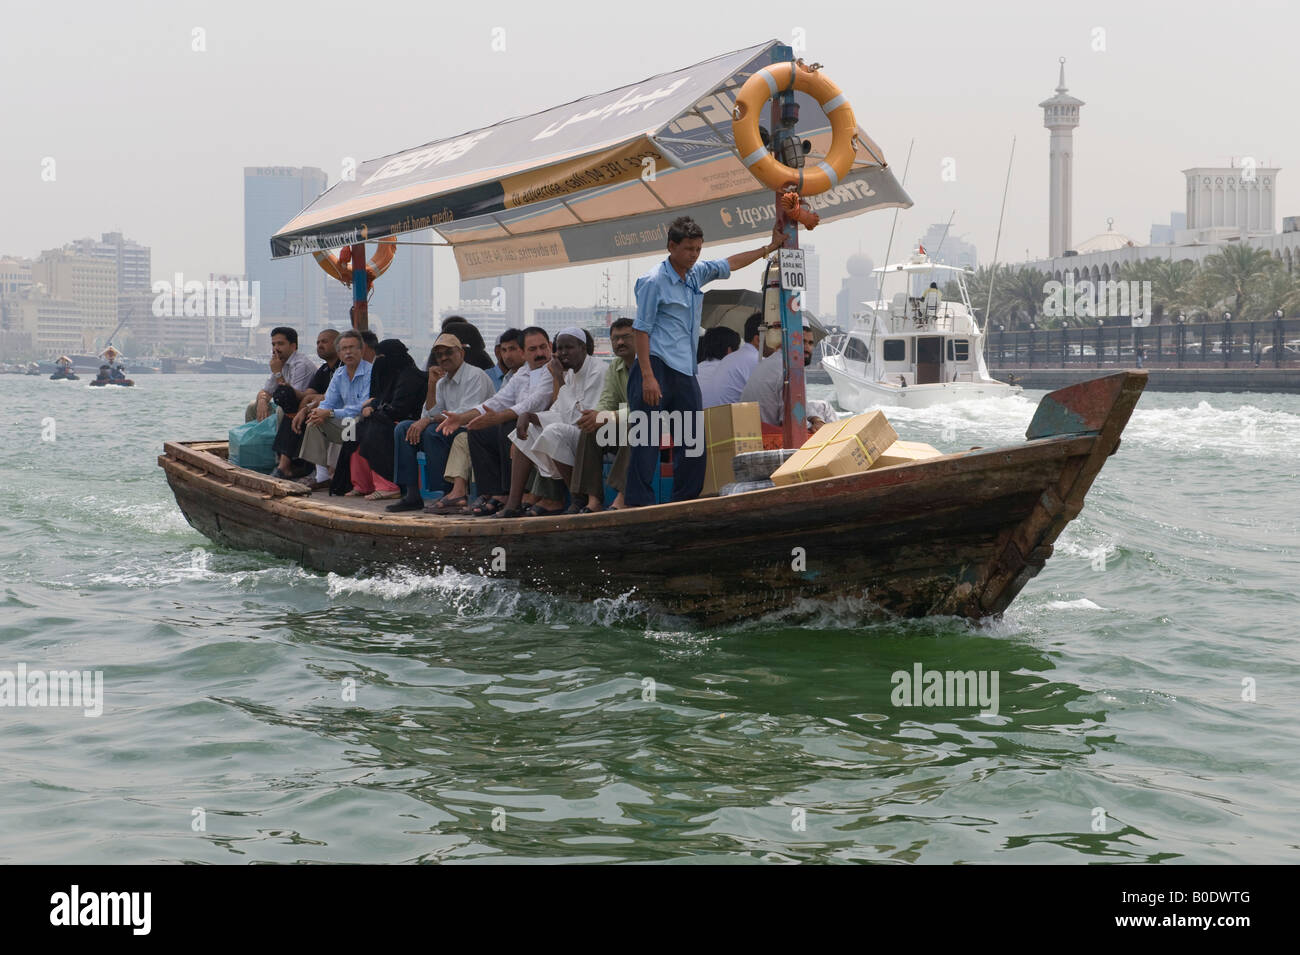 Dubai, United Arab Emirates (UAE). An abra (water taxi) taking passengers across Dubai Creek, which divides the city Stock Photo